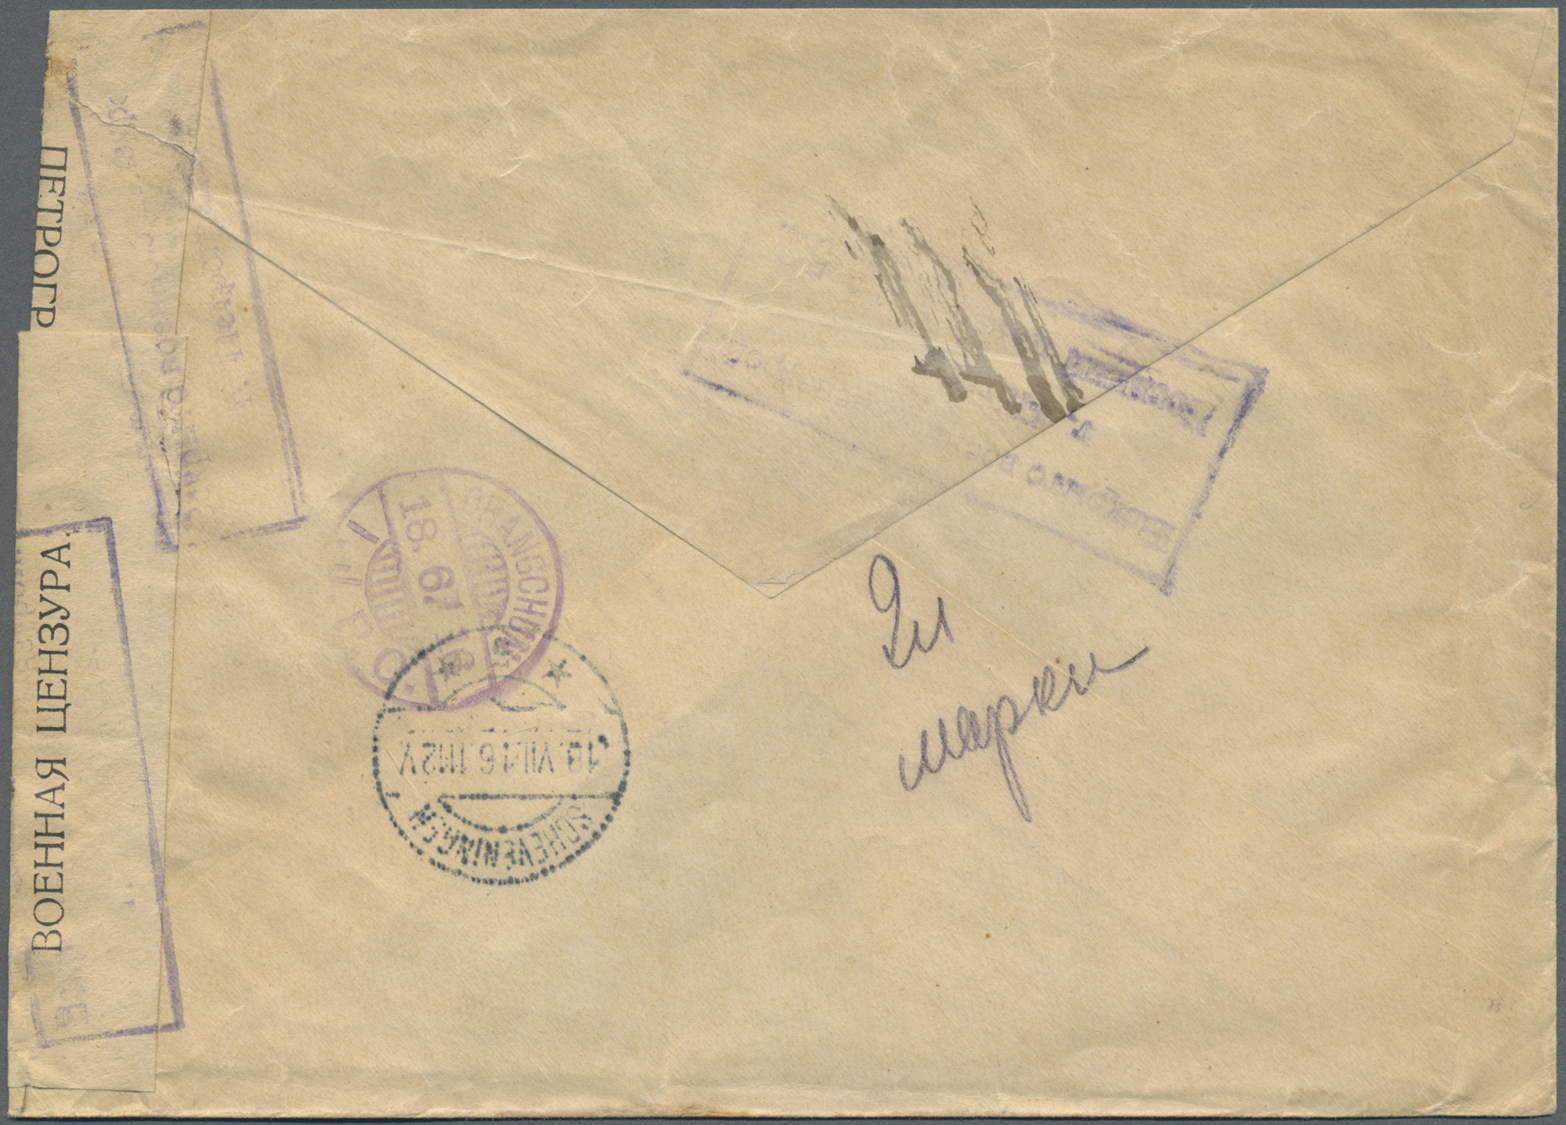 Br Japanische Post In China: 1916. Registered Envelope Addressed To Holland Bearing Japanese Post Office In Shanghai SG - 1943-45 Shanghai & Nanjing